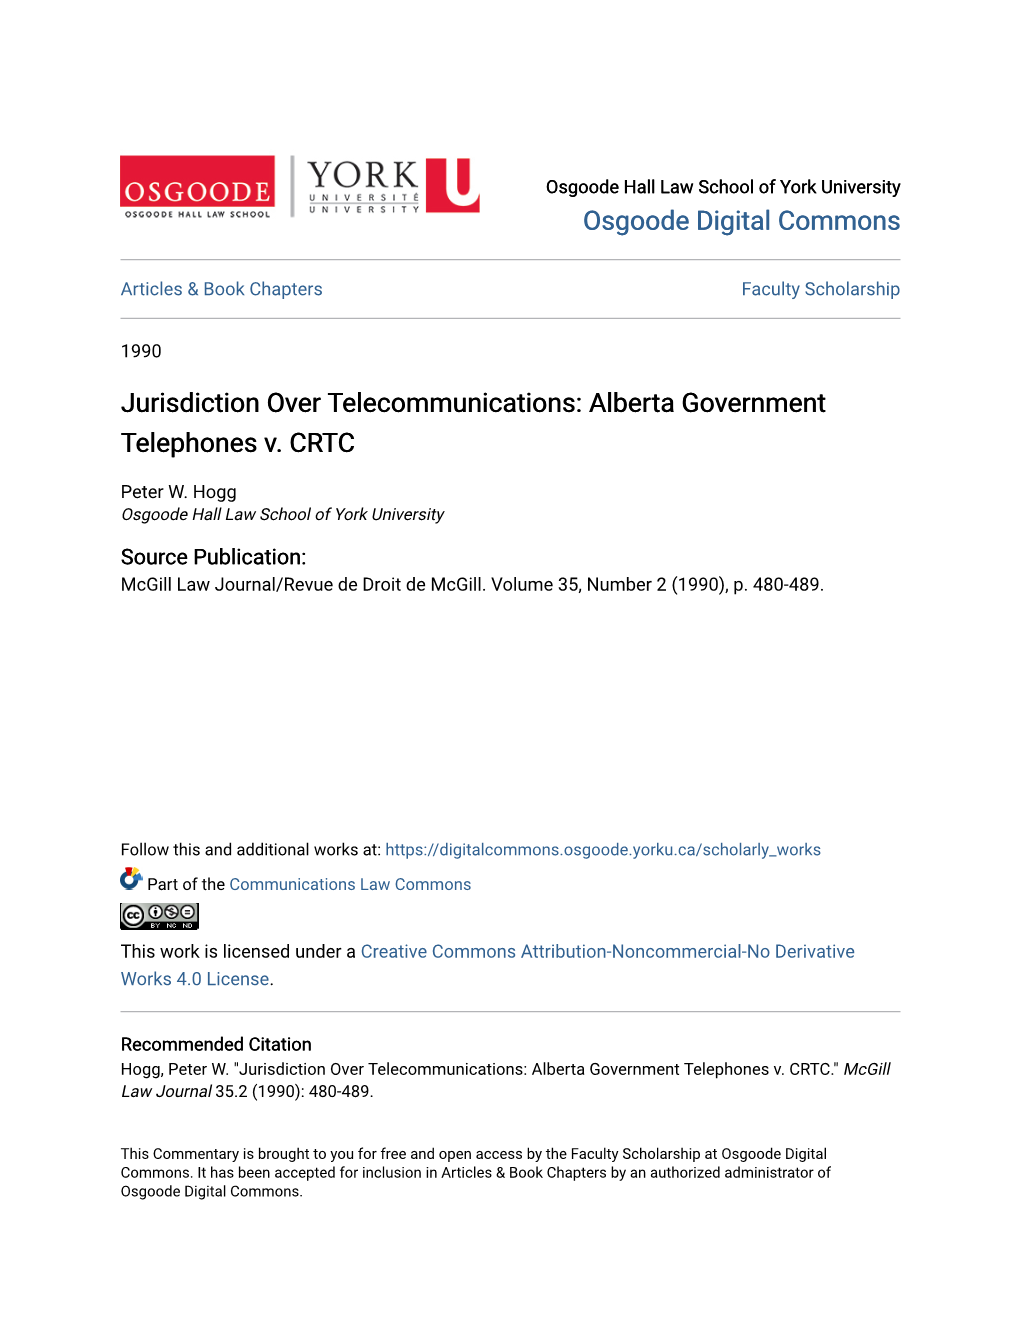 Alberta Government Telephones V. CRTC